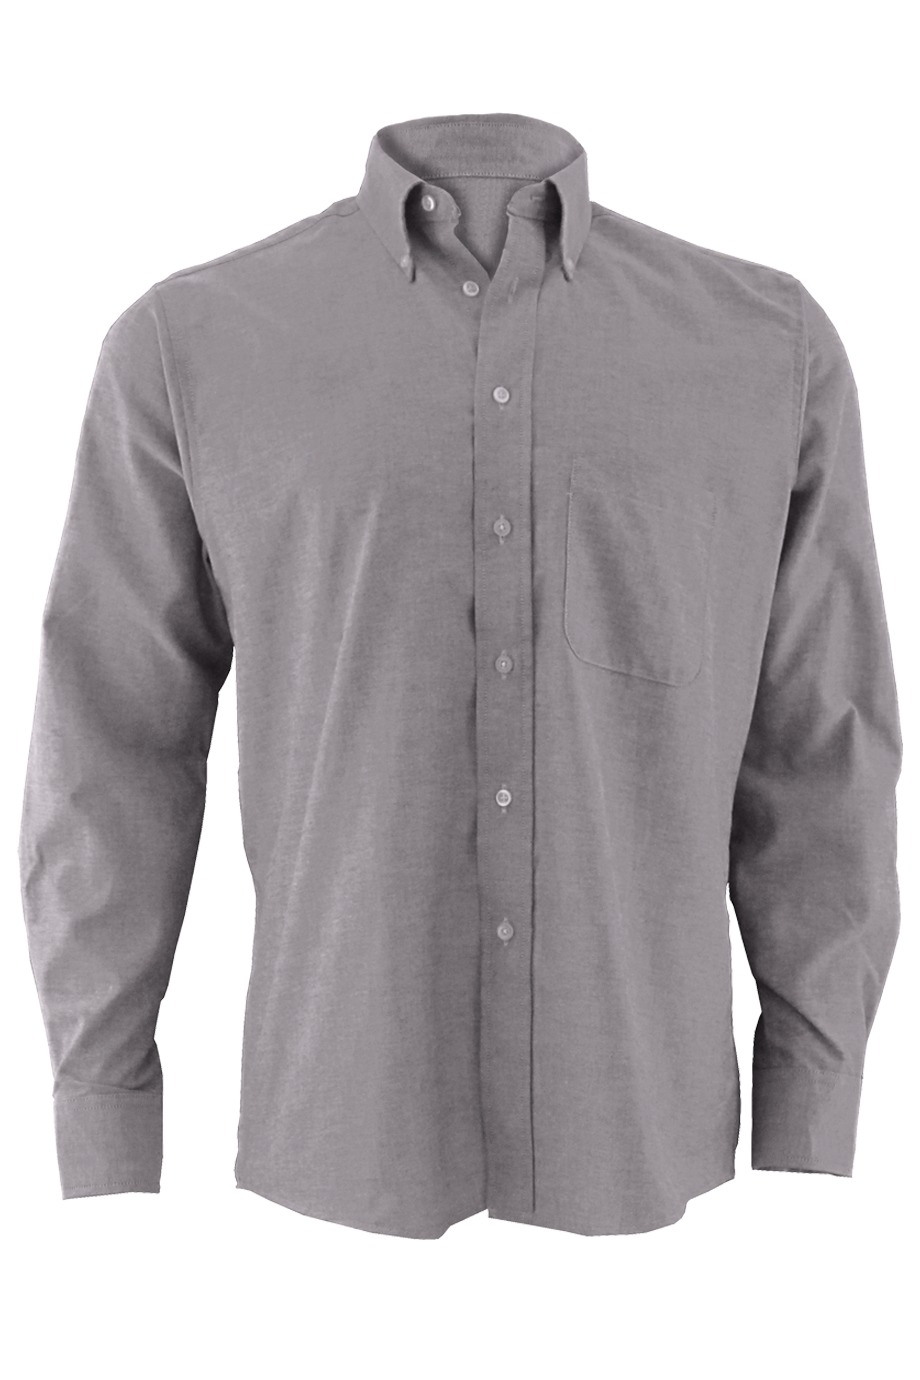 Edward's Men's Oxford Long Sleeve Shirt 